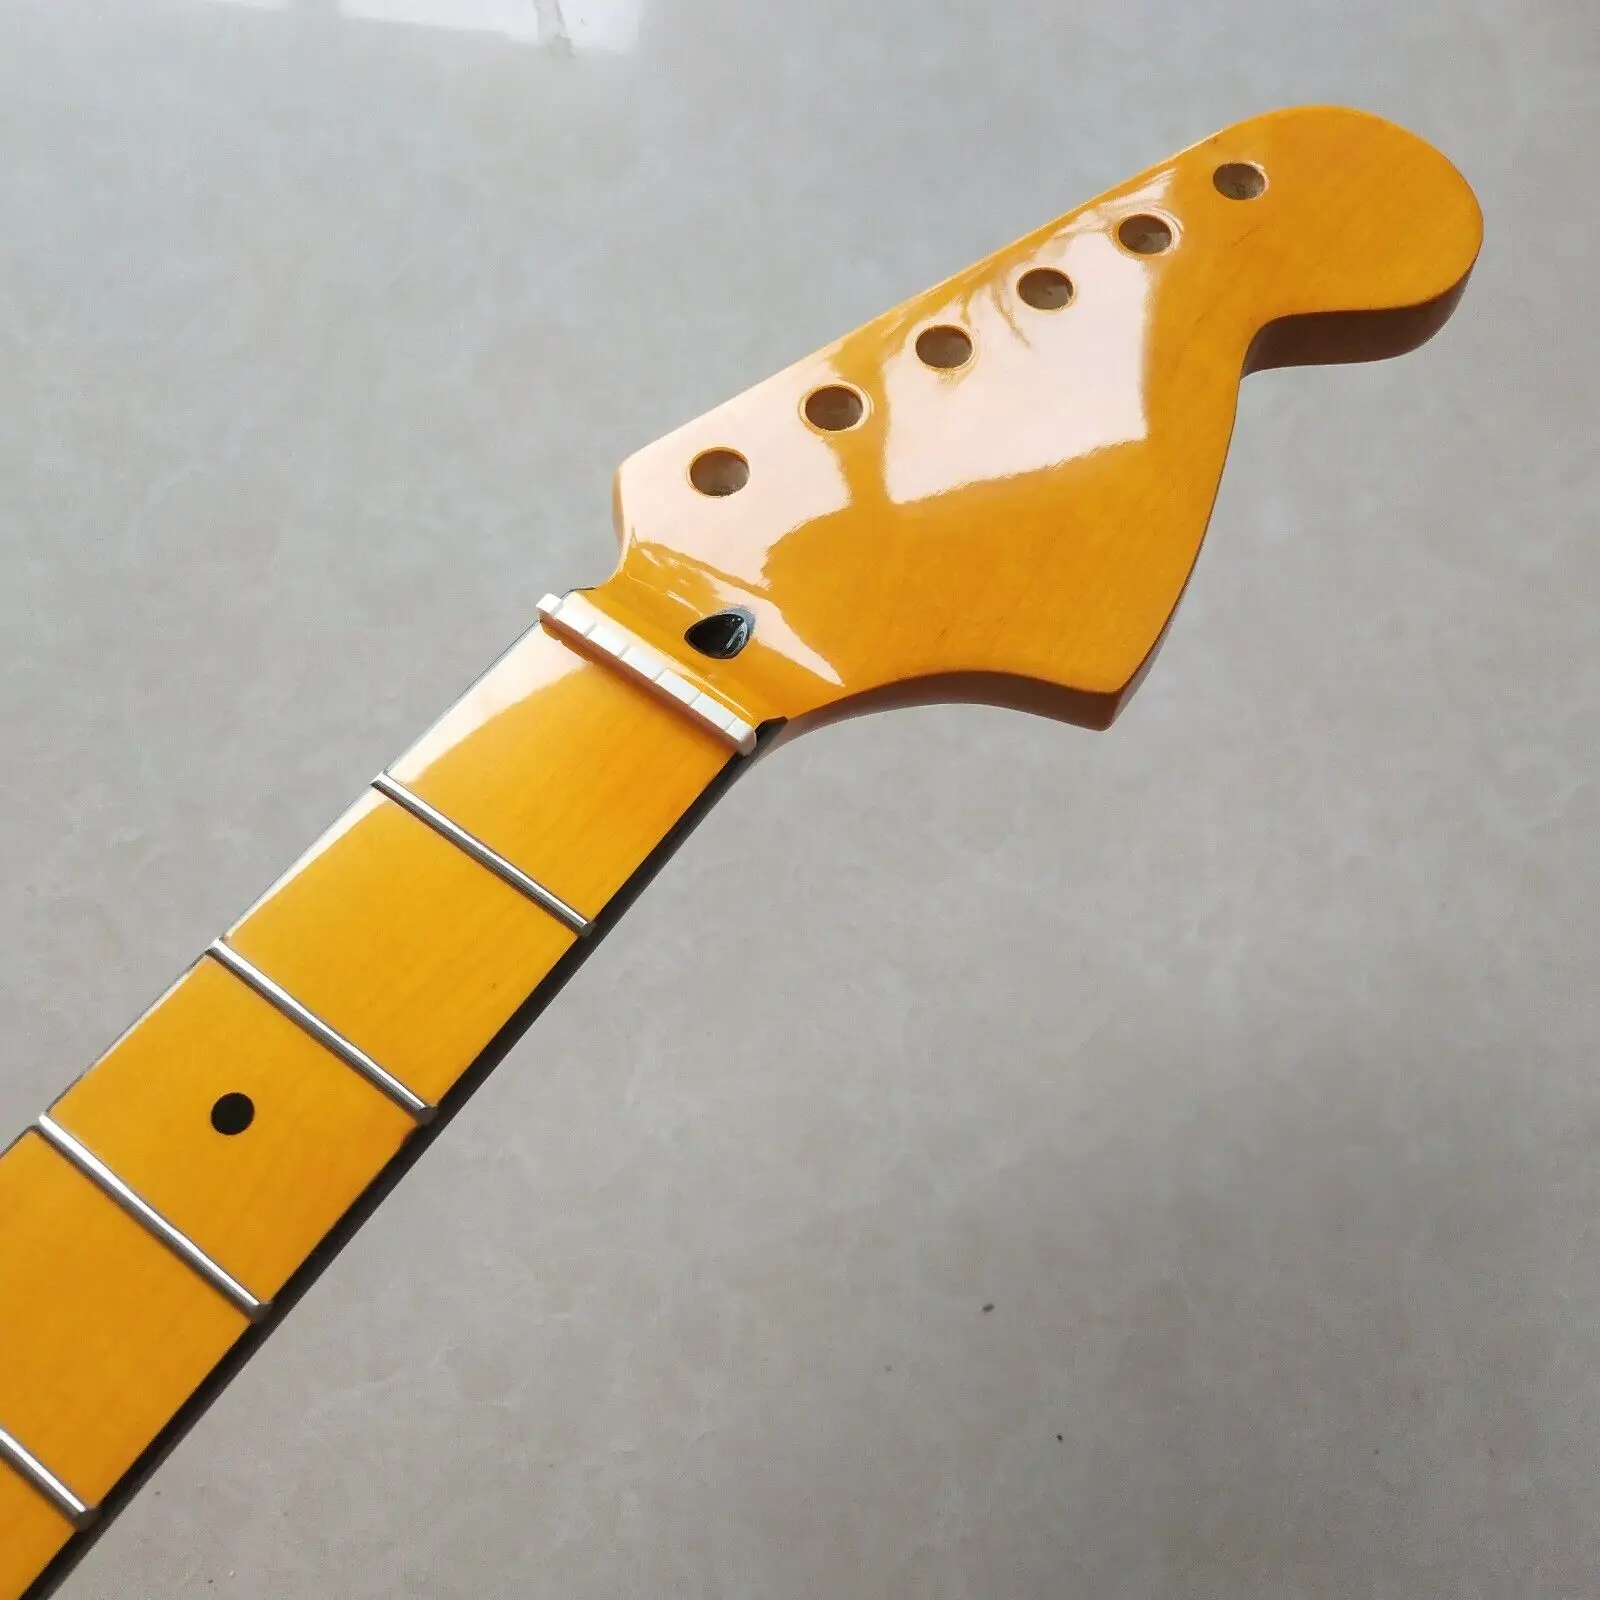 Enlarge Maple Yellow Guitar Neck 22fret 25.5inch Maple Fretboard Dot Inlay Big head part